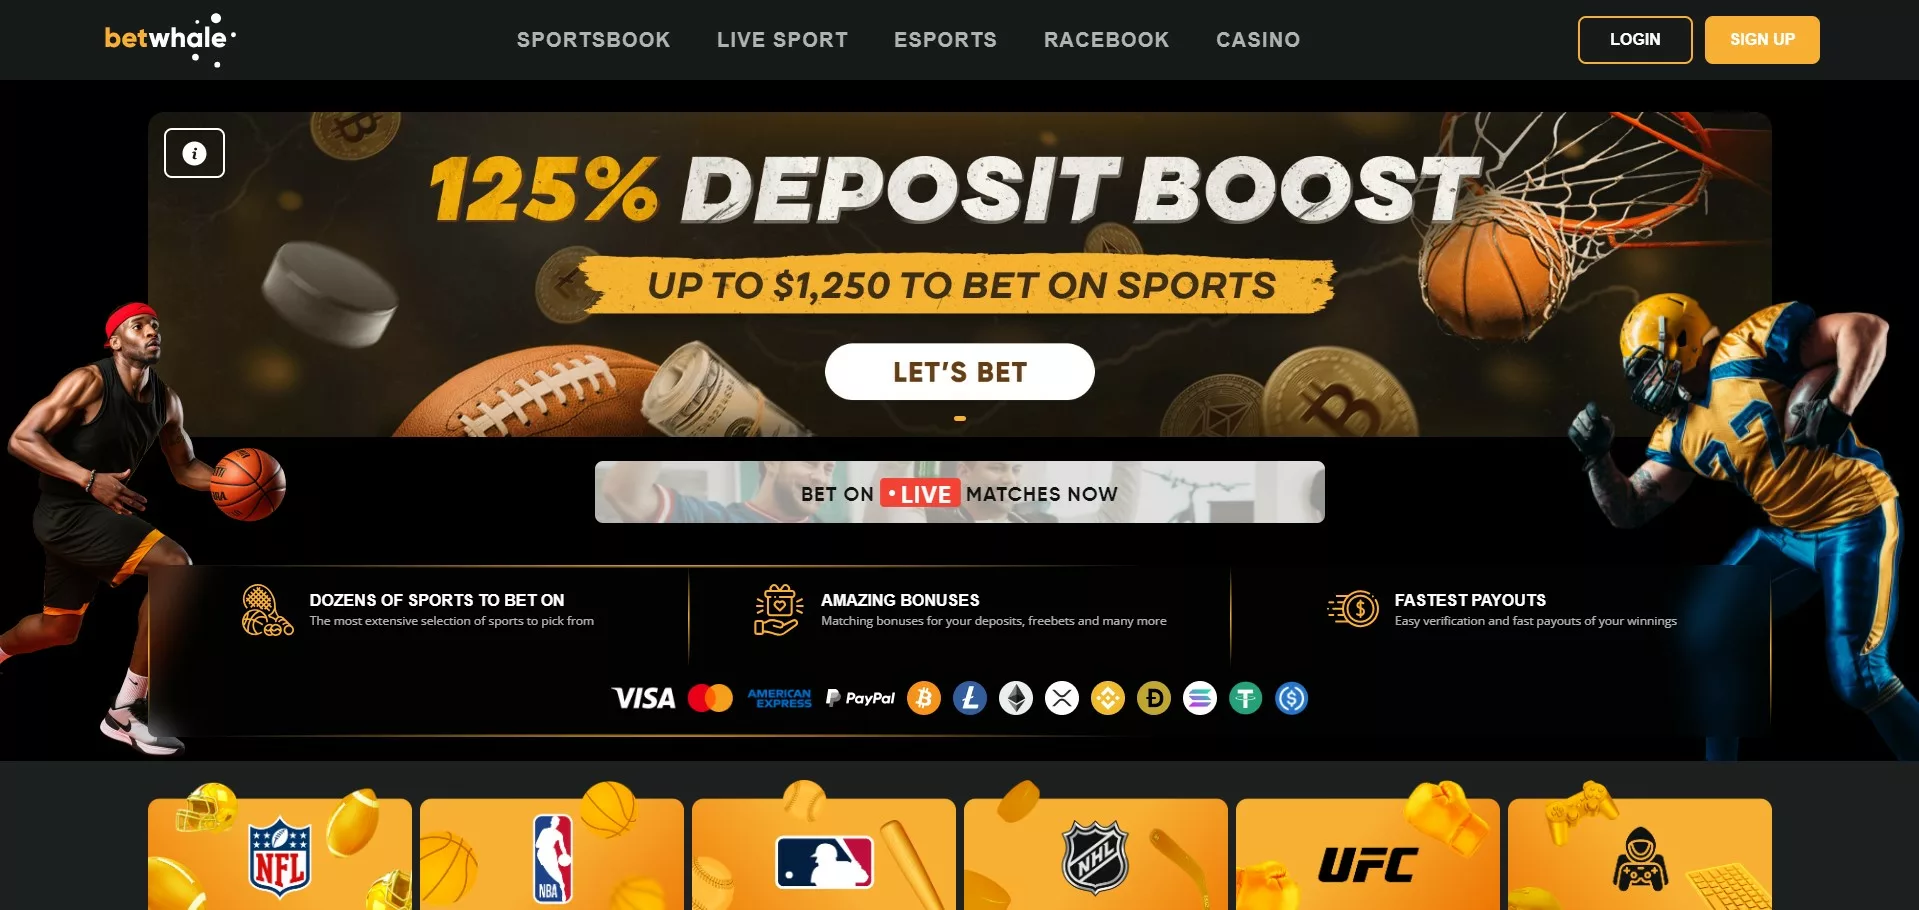 Betwhale Sports Bonus: 125% Deposit Boost Bonus